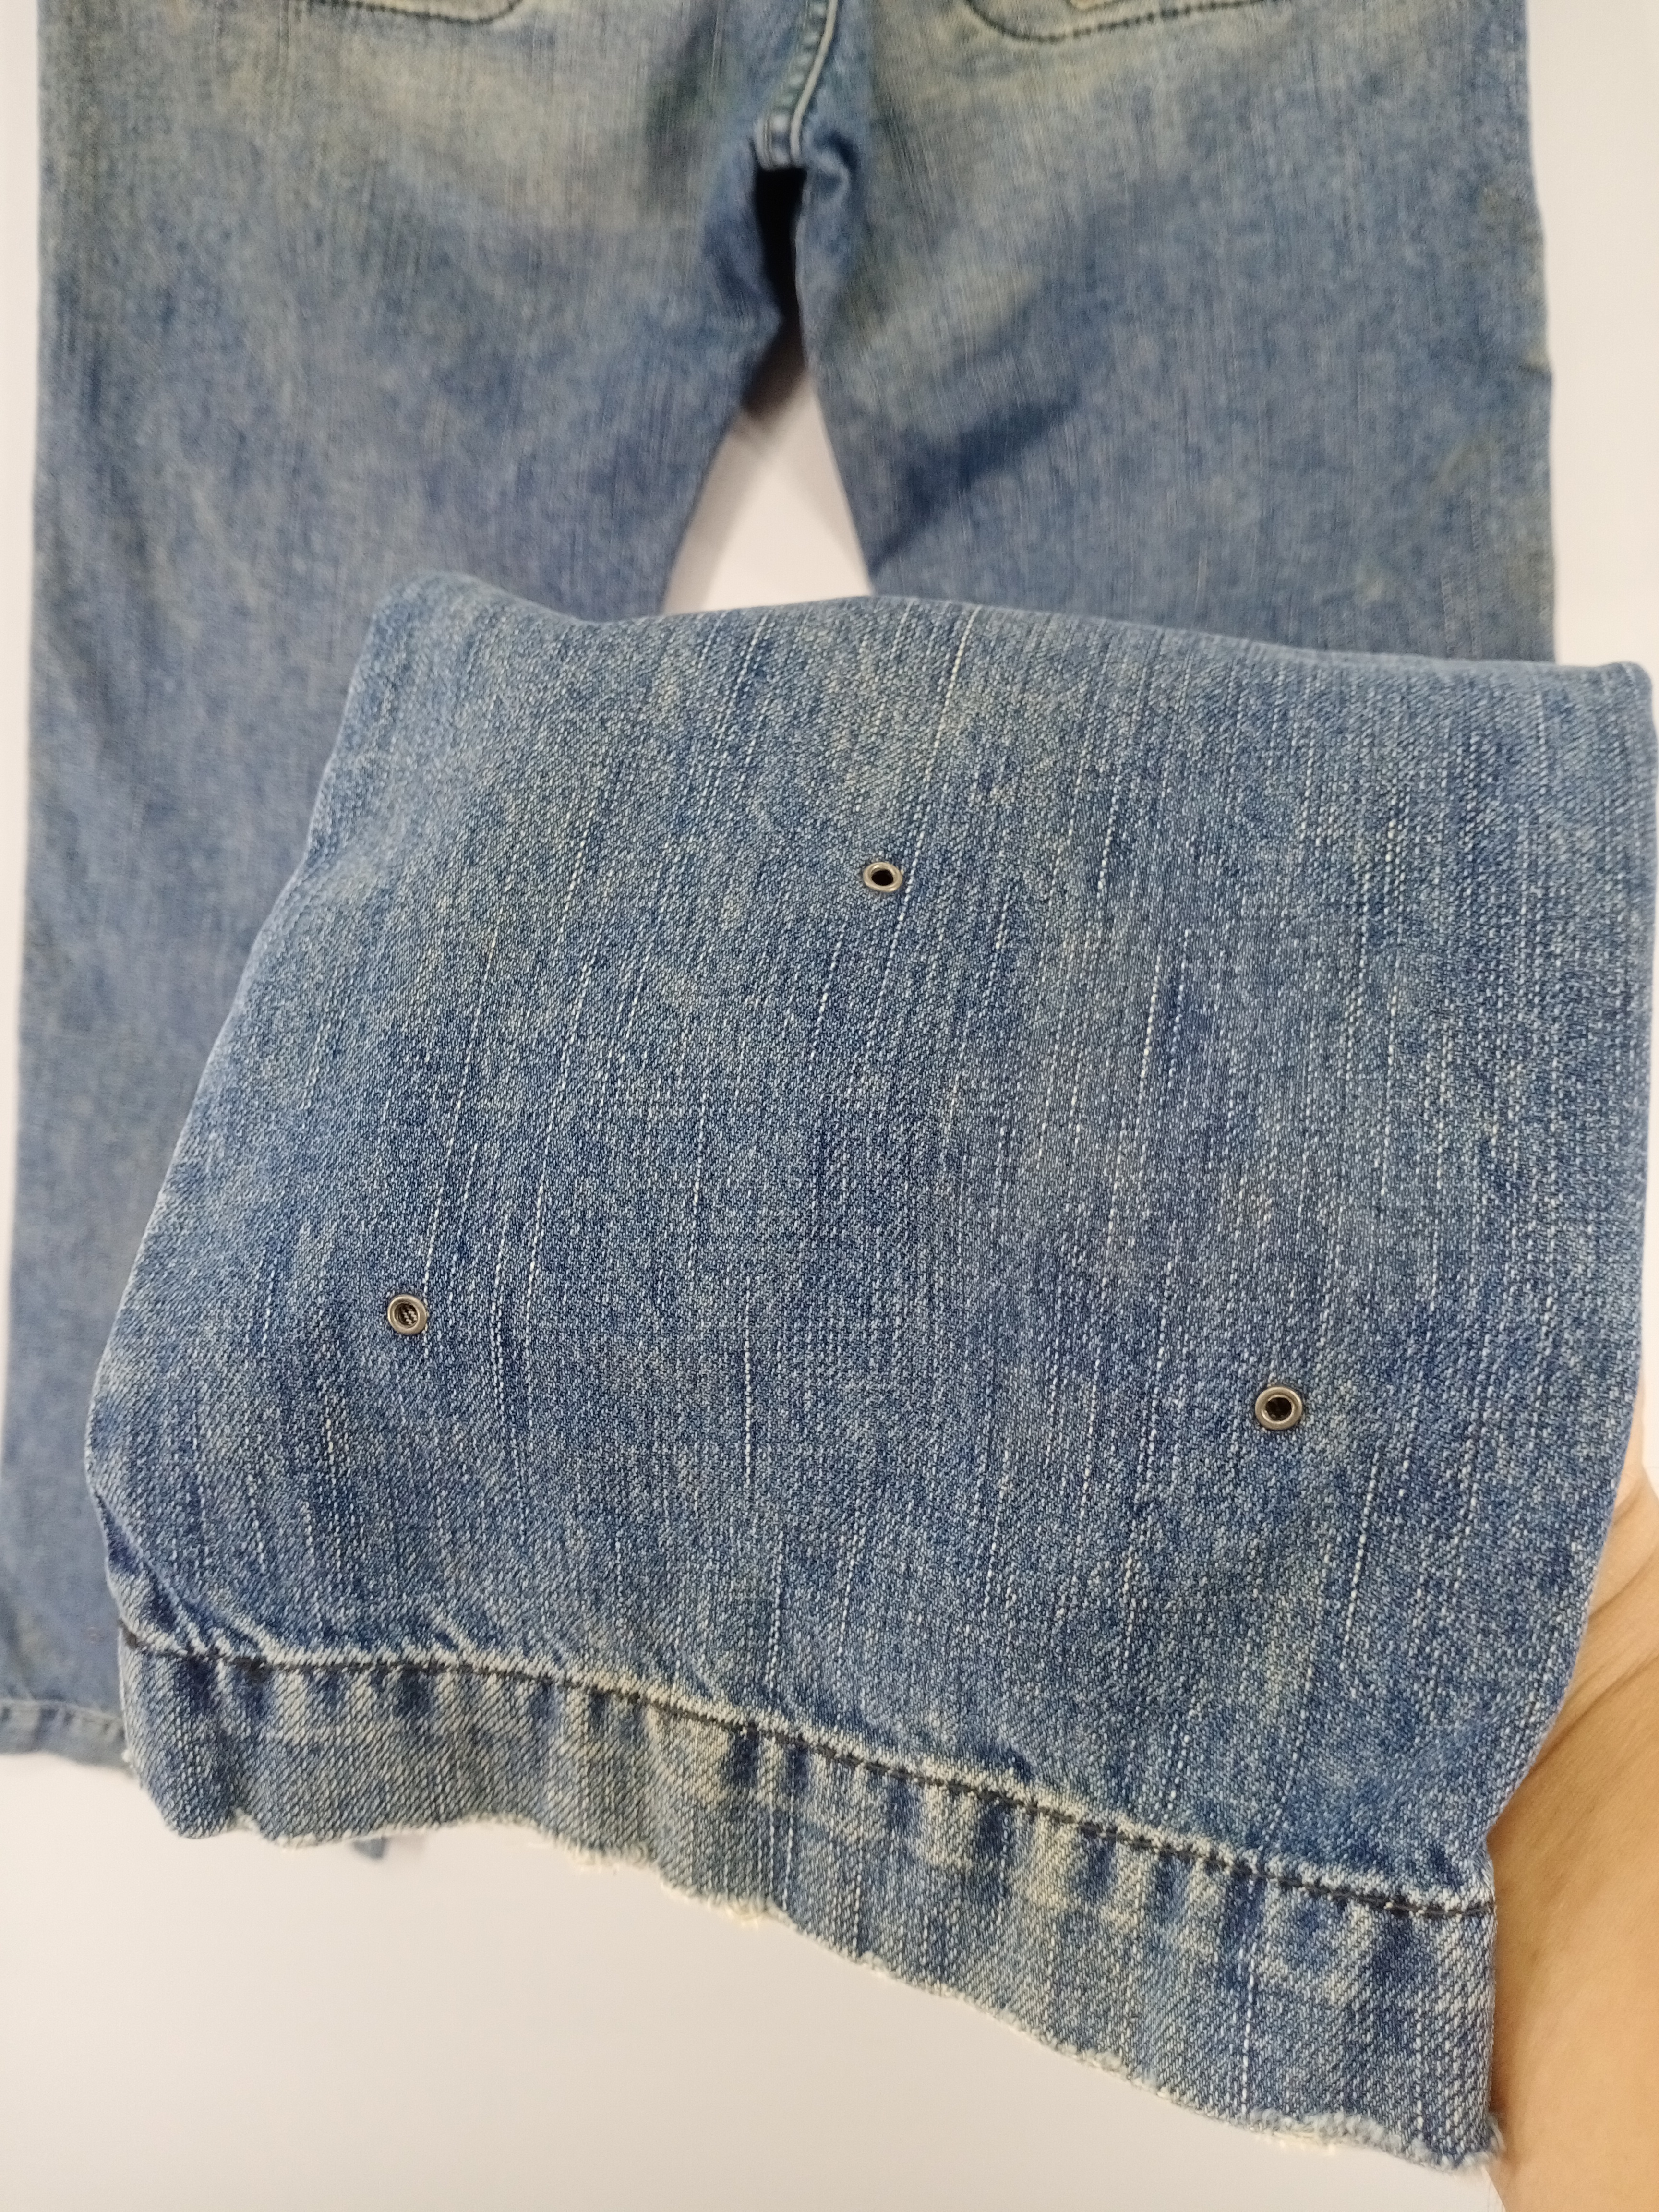 💥RARE💥Diesel Medium Wash Patches Distressed Jeans - 7